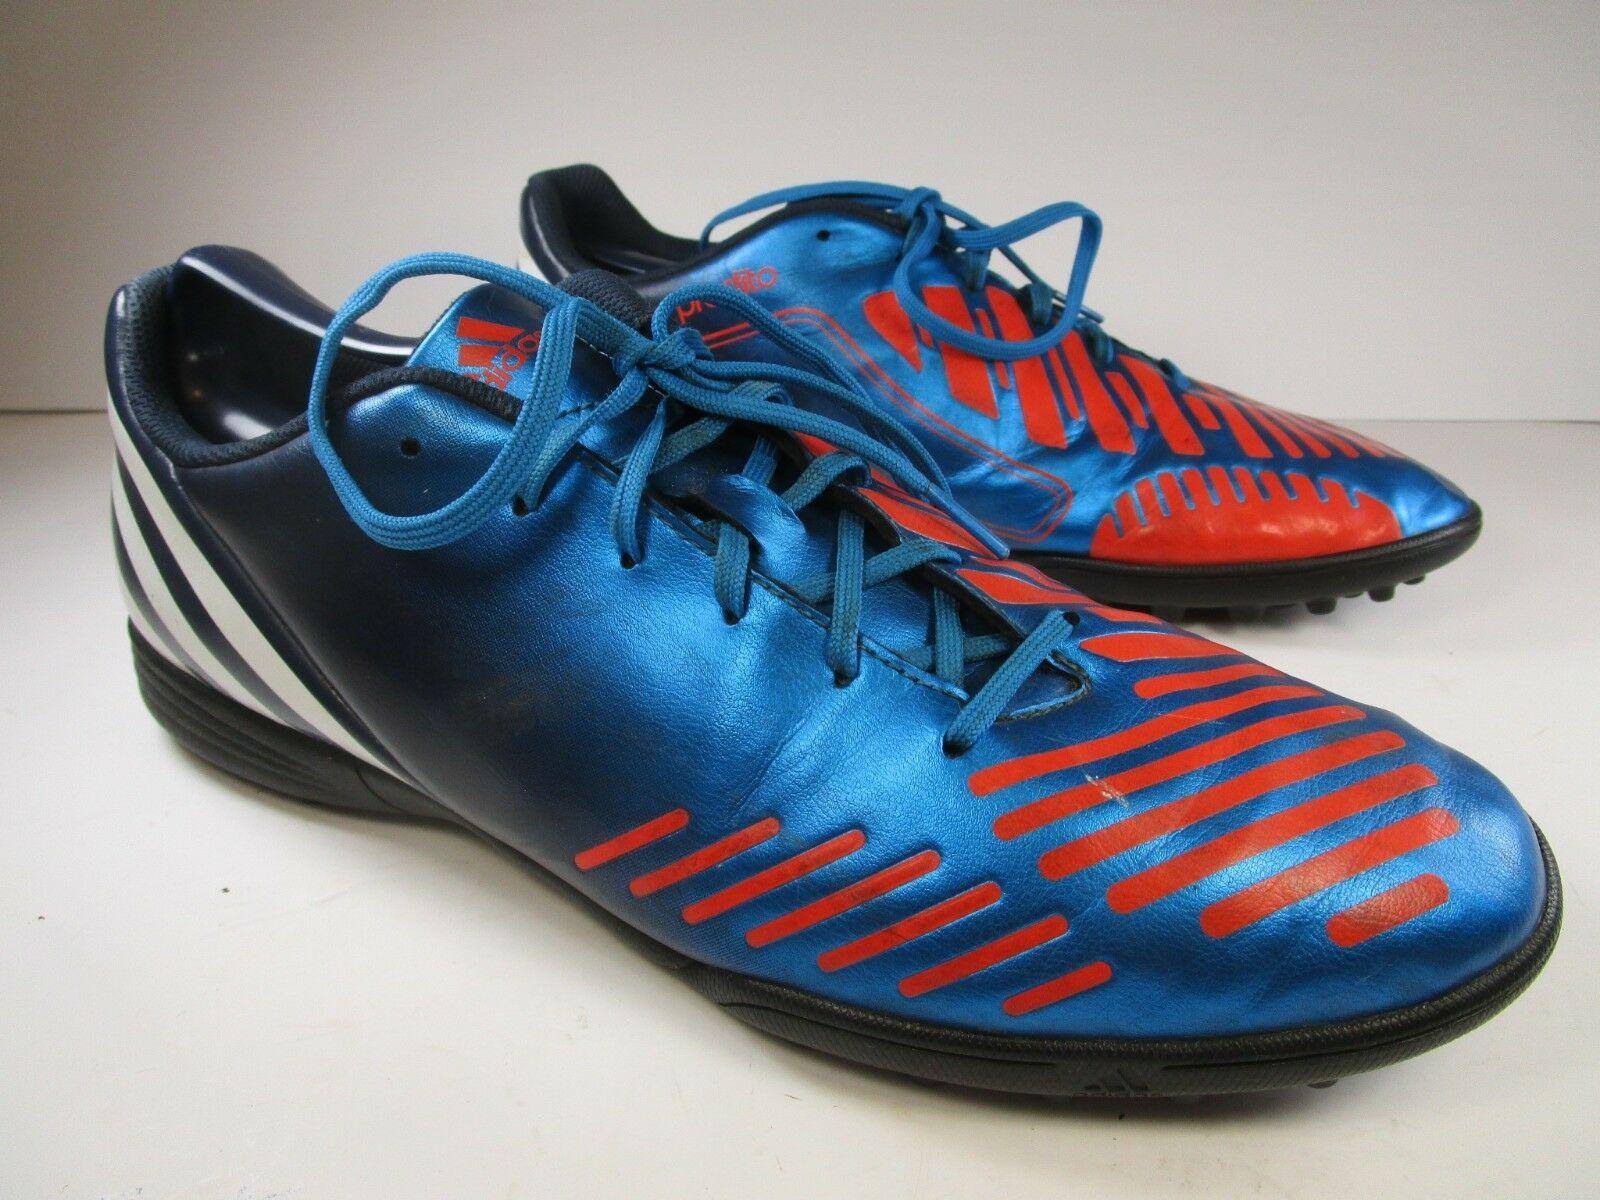 Adidas Predator Predito LZ TRX Indoor Soccer Shoes Men’s US Size 12 Blue